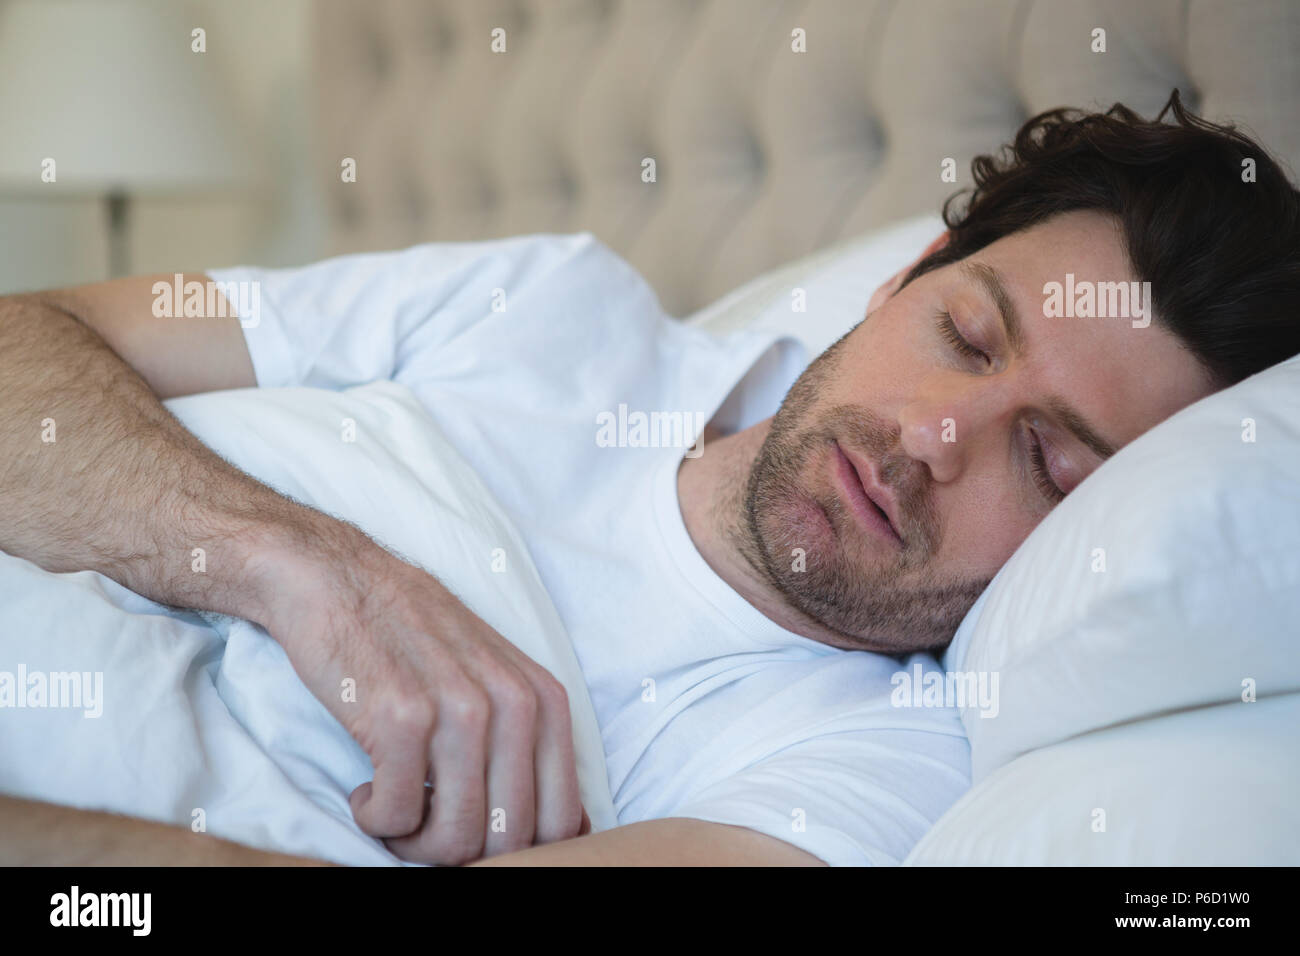 Man sleeping in bedroom Stock Photo